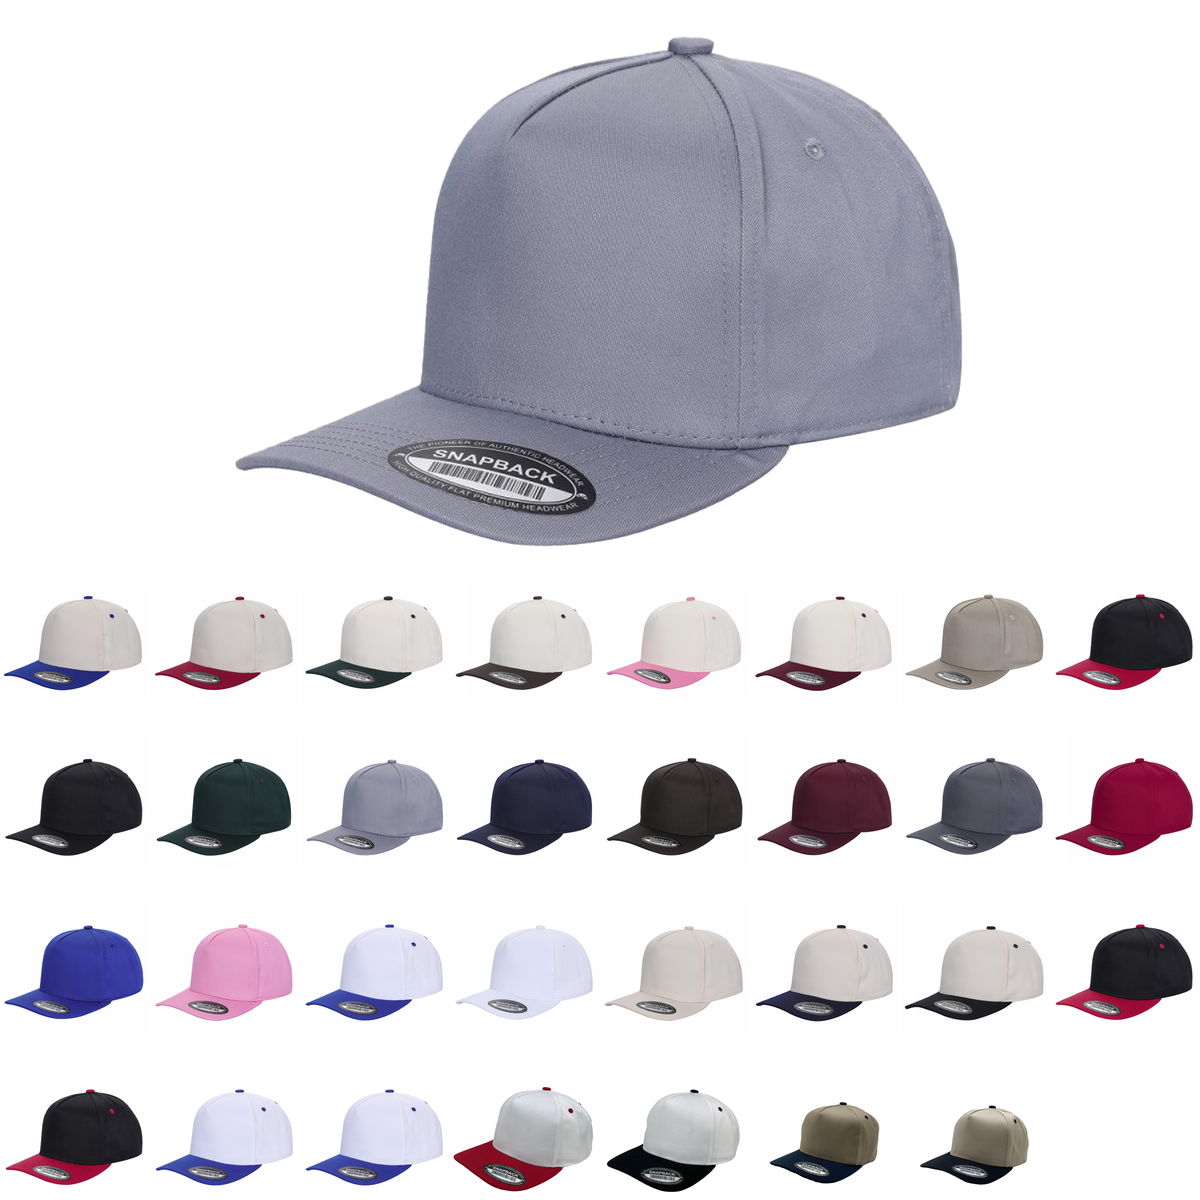 Wholesale Park Baseball Unbranded – 5 Blank Panel Cap Hat, The